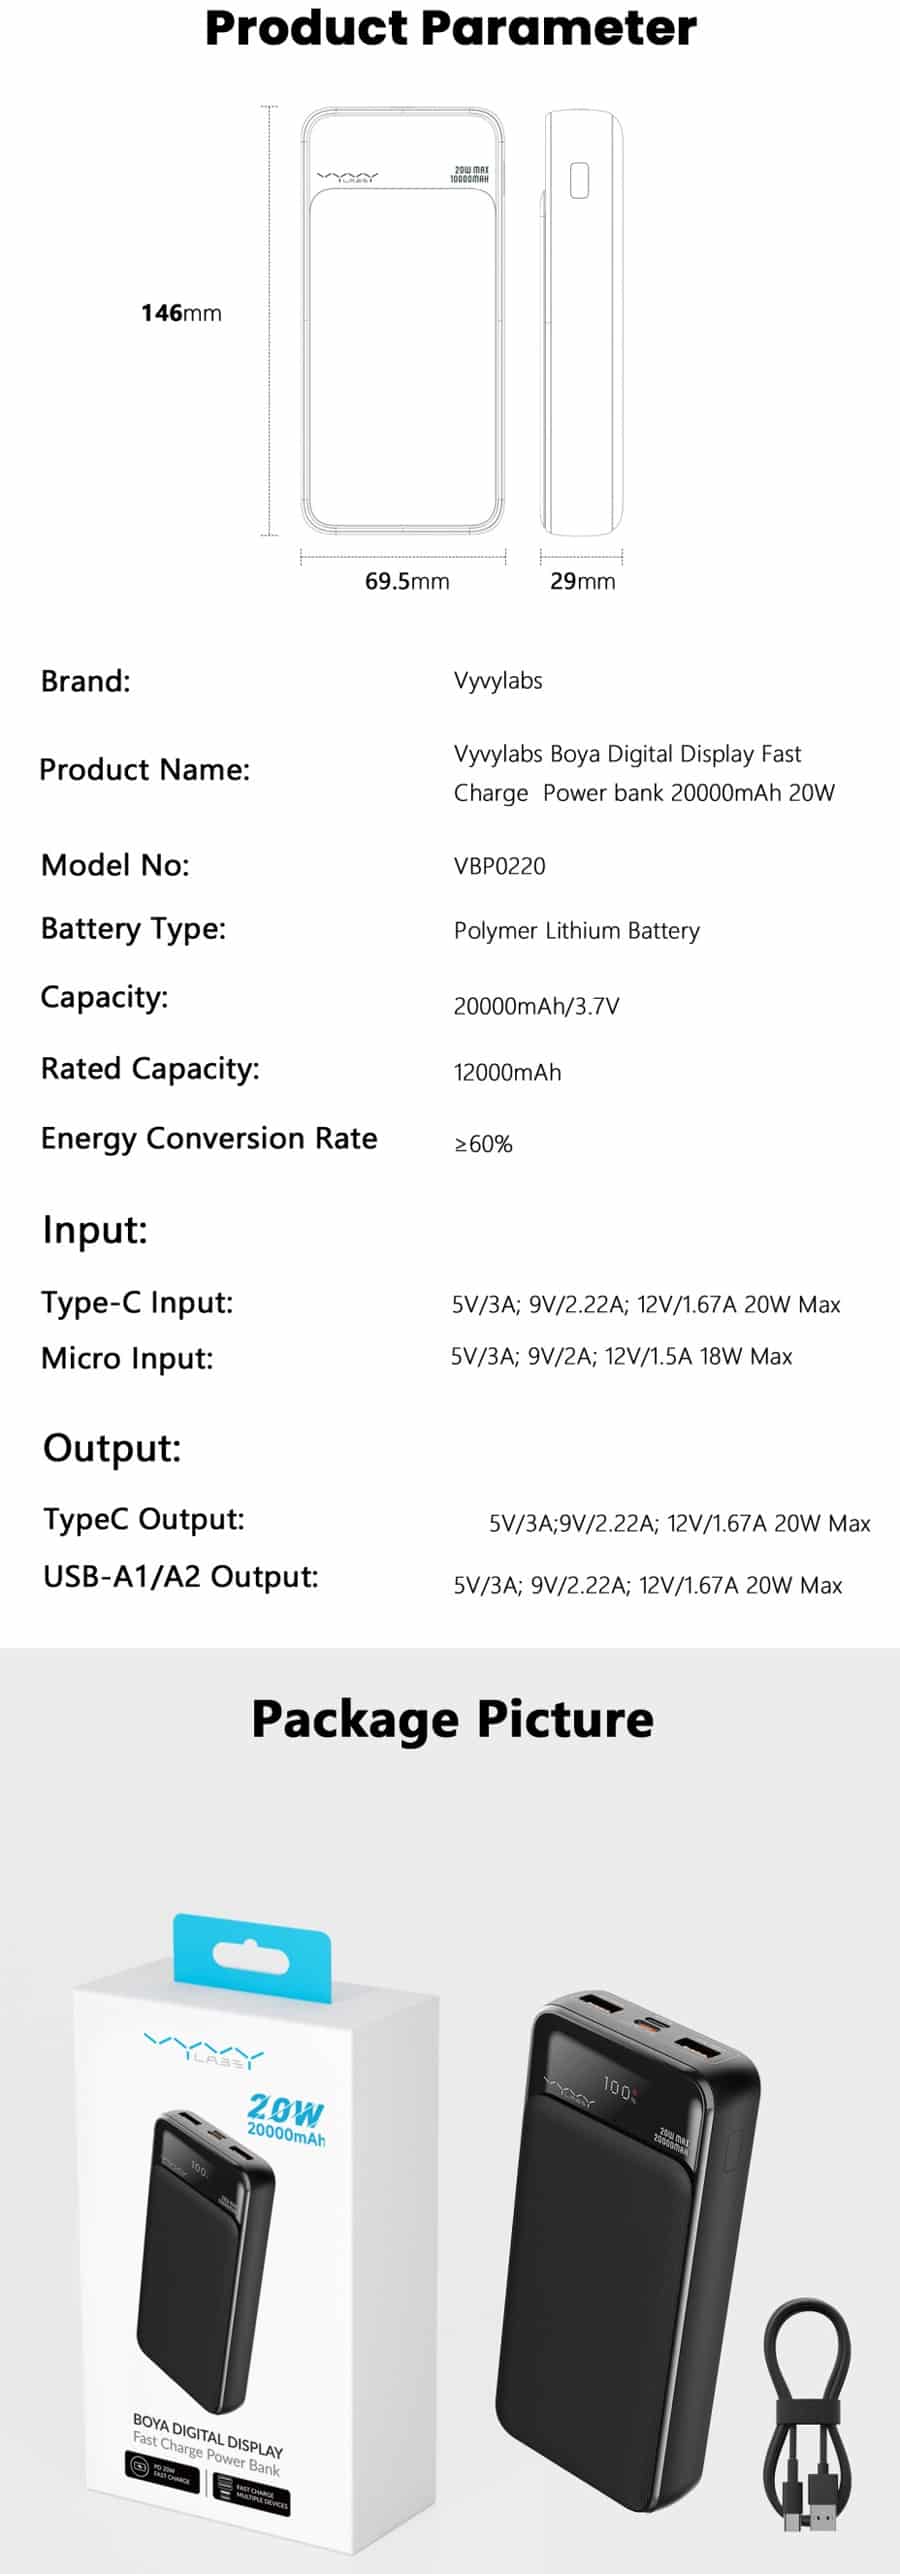 Vyvylabs VBP0220-02 Boya Digital Display Fast Charge 20000mAh 20W Power Bank